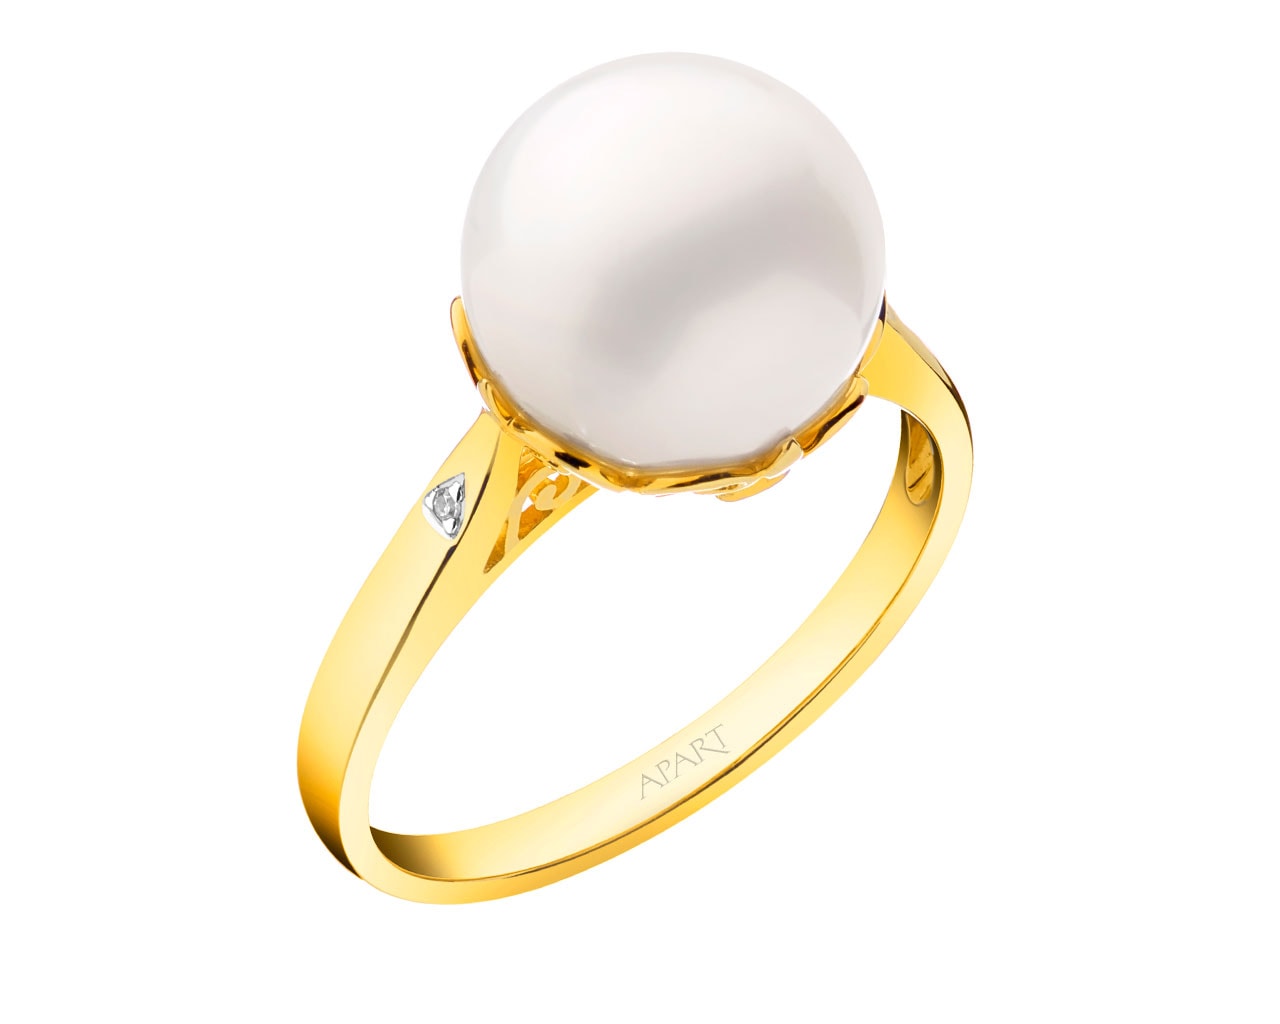 Prsten ze žlutého zlata s diamanty a perlou 0,01 ct - ryzost 585